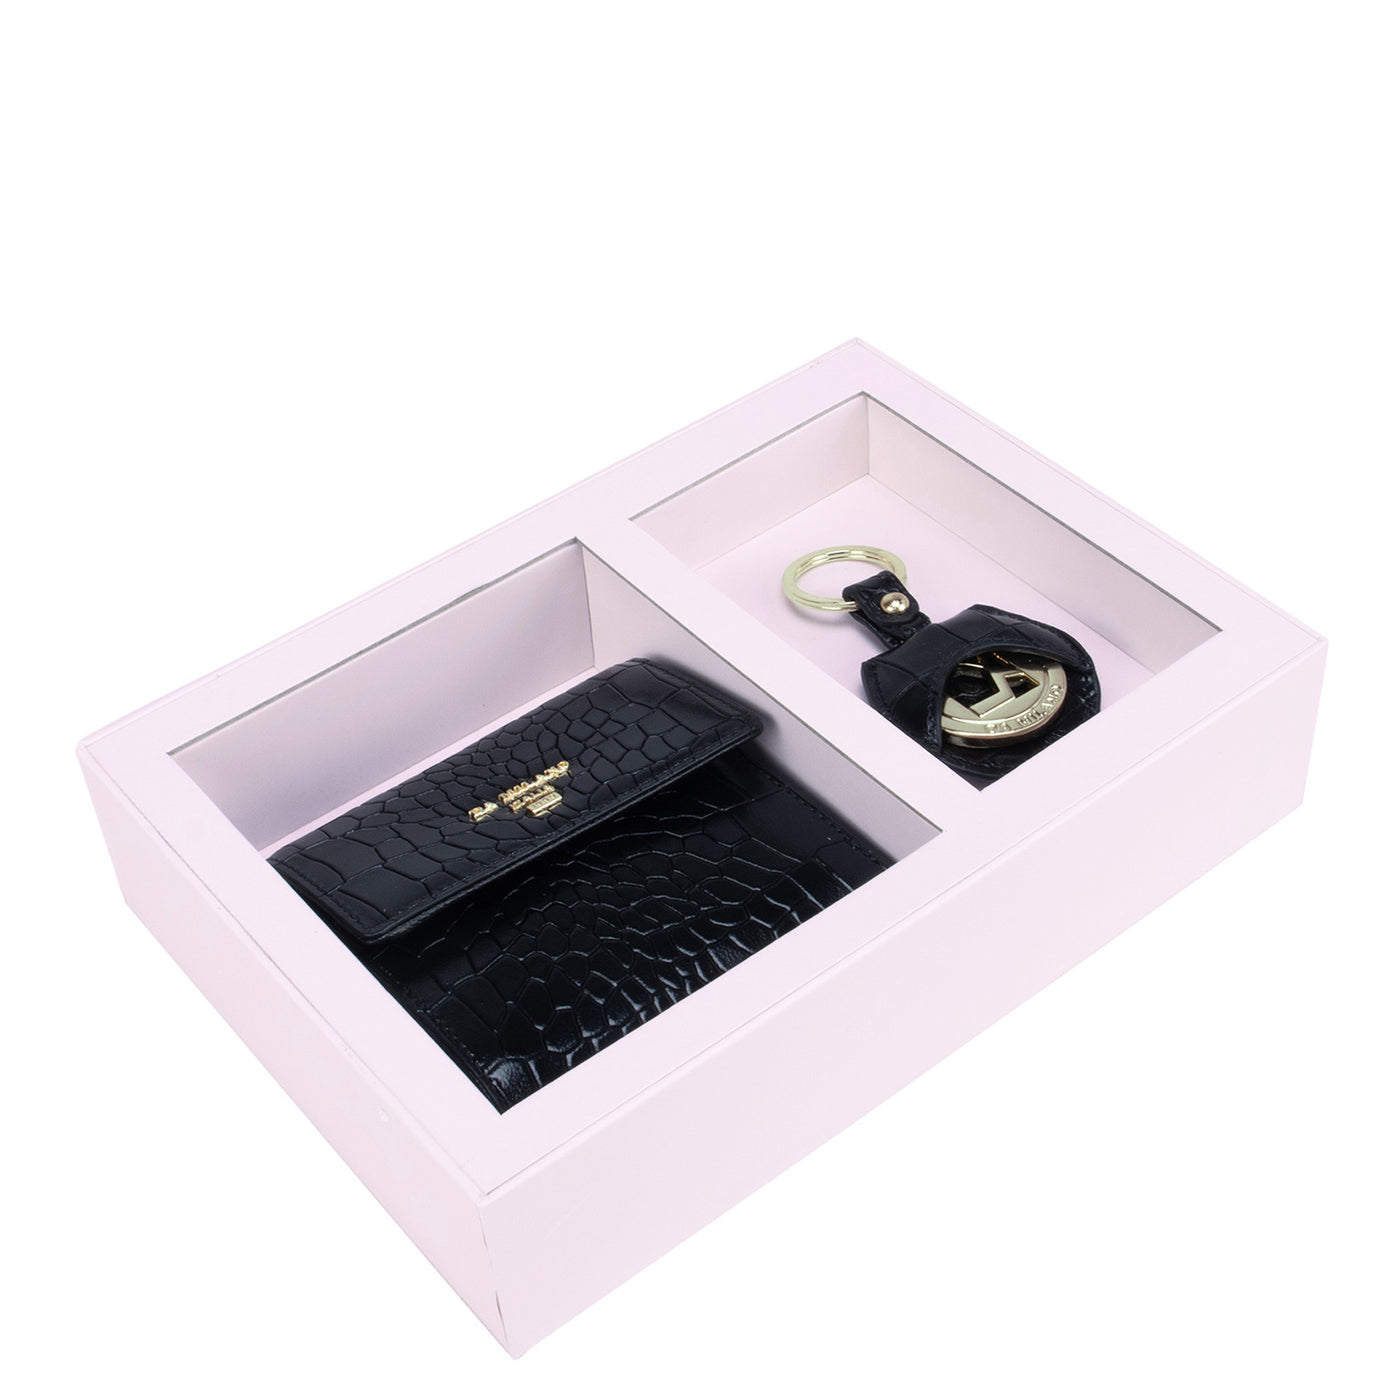 Black Croco Textured Ladies Wallet & Key Chain Gift Set